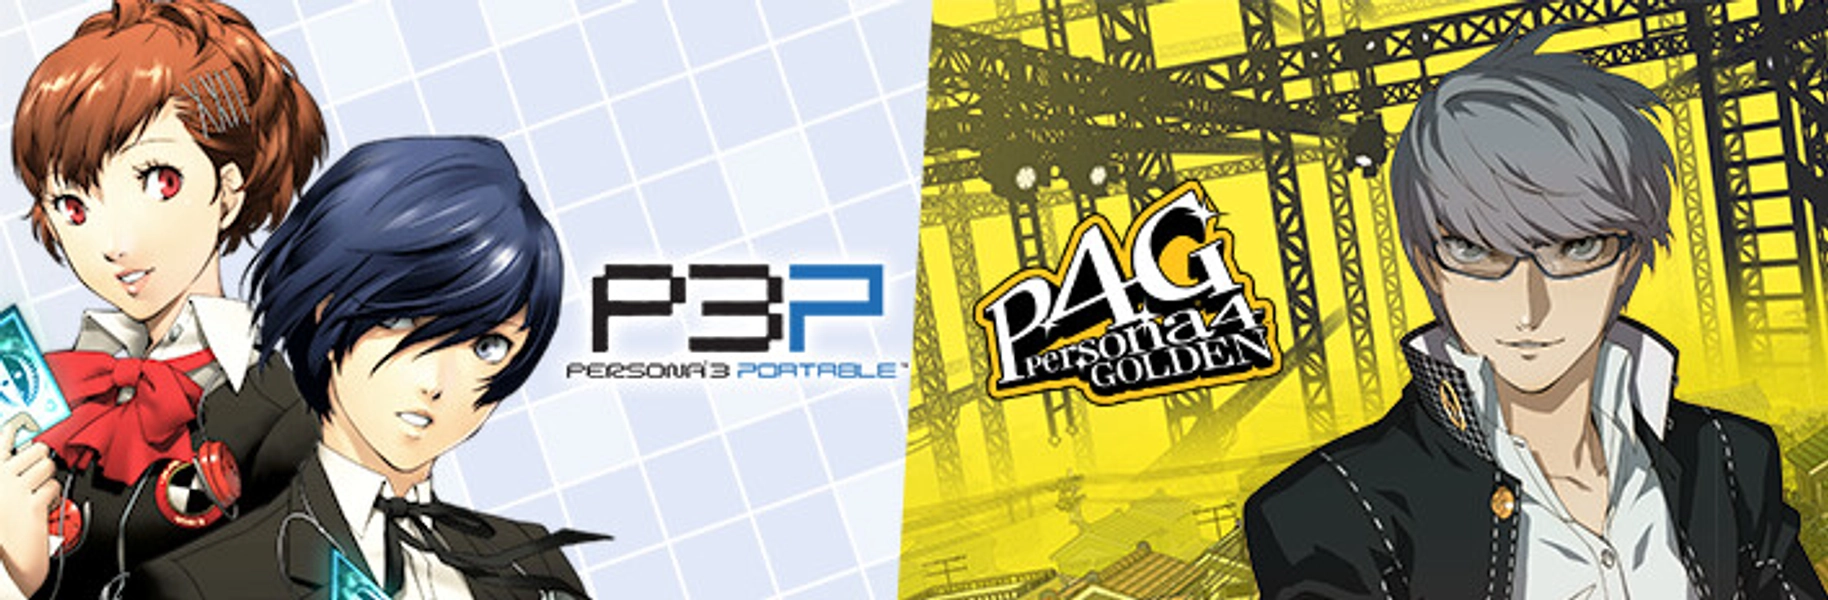 Persona 3 Portable & Persona 4 Golden Bundle on Steam